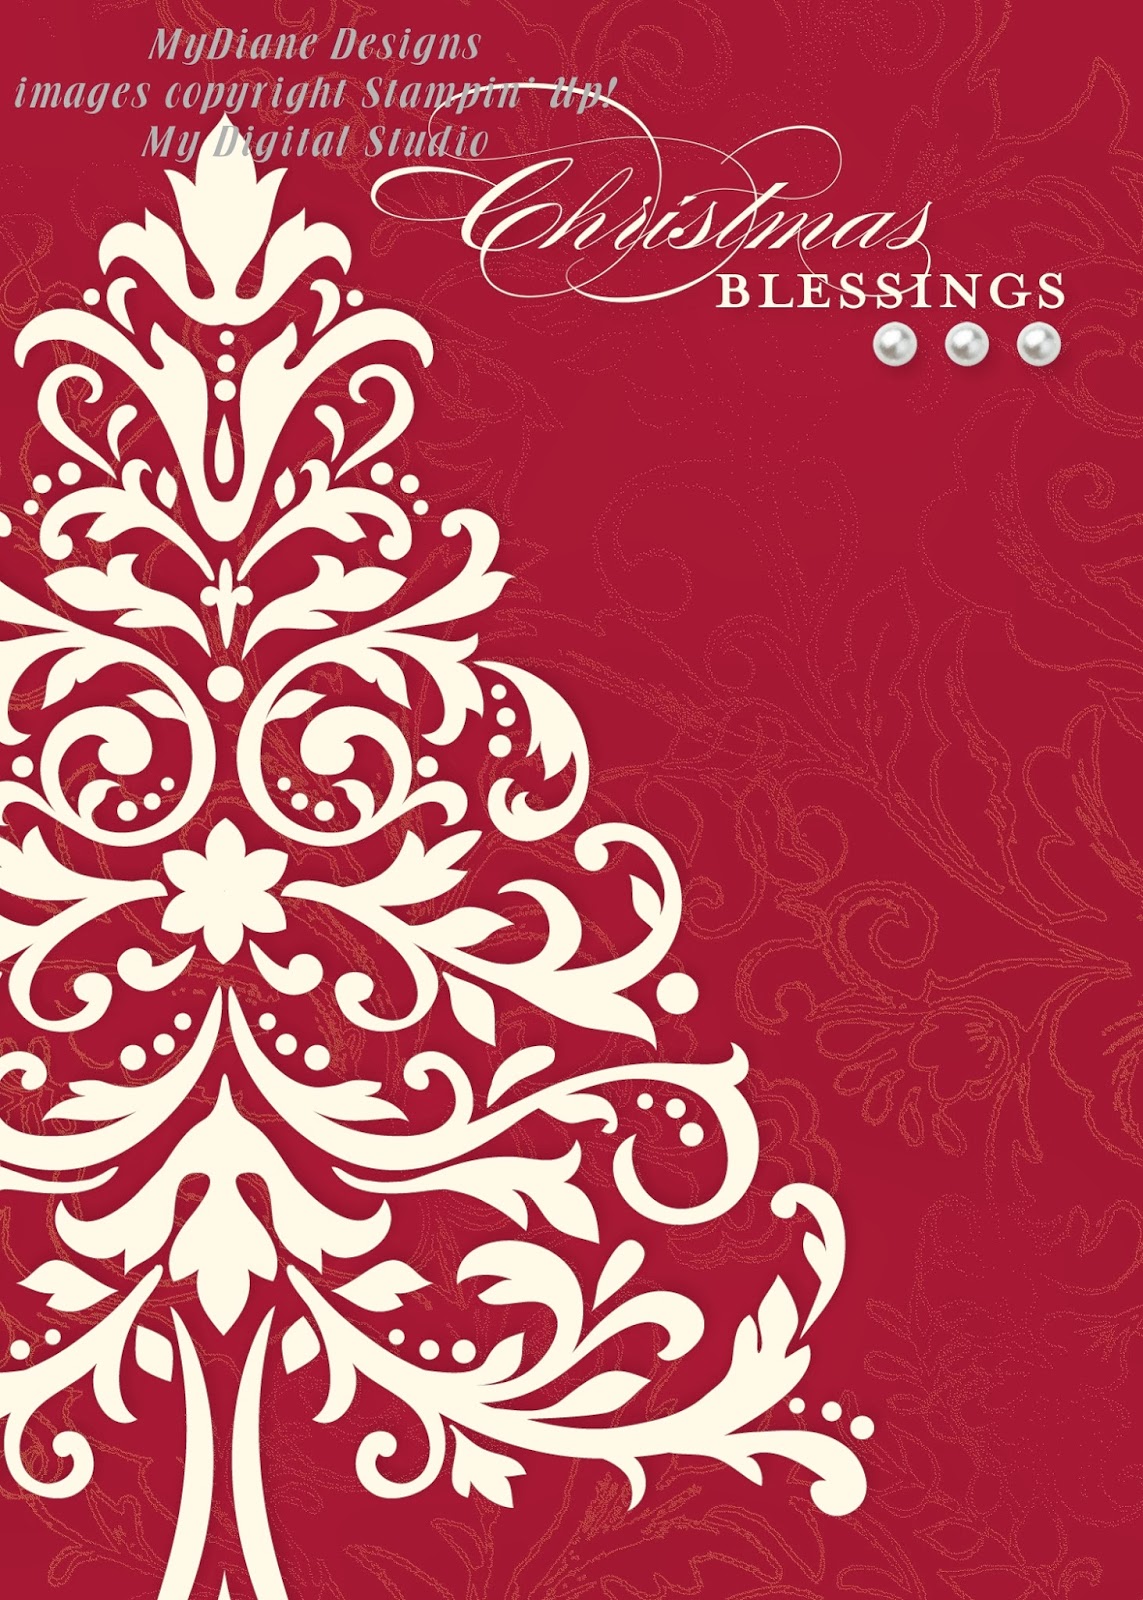 mydiane-designs-2013-christmas-card